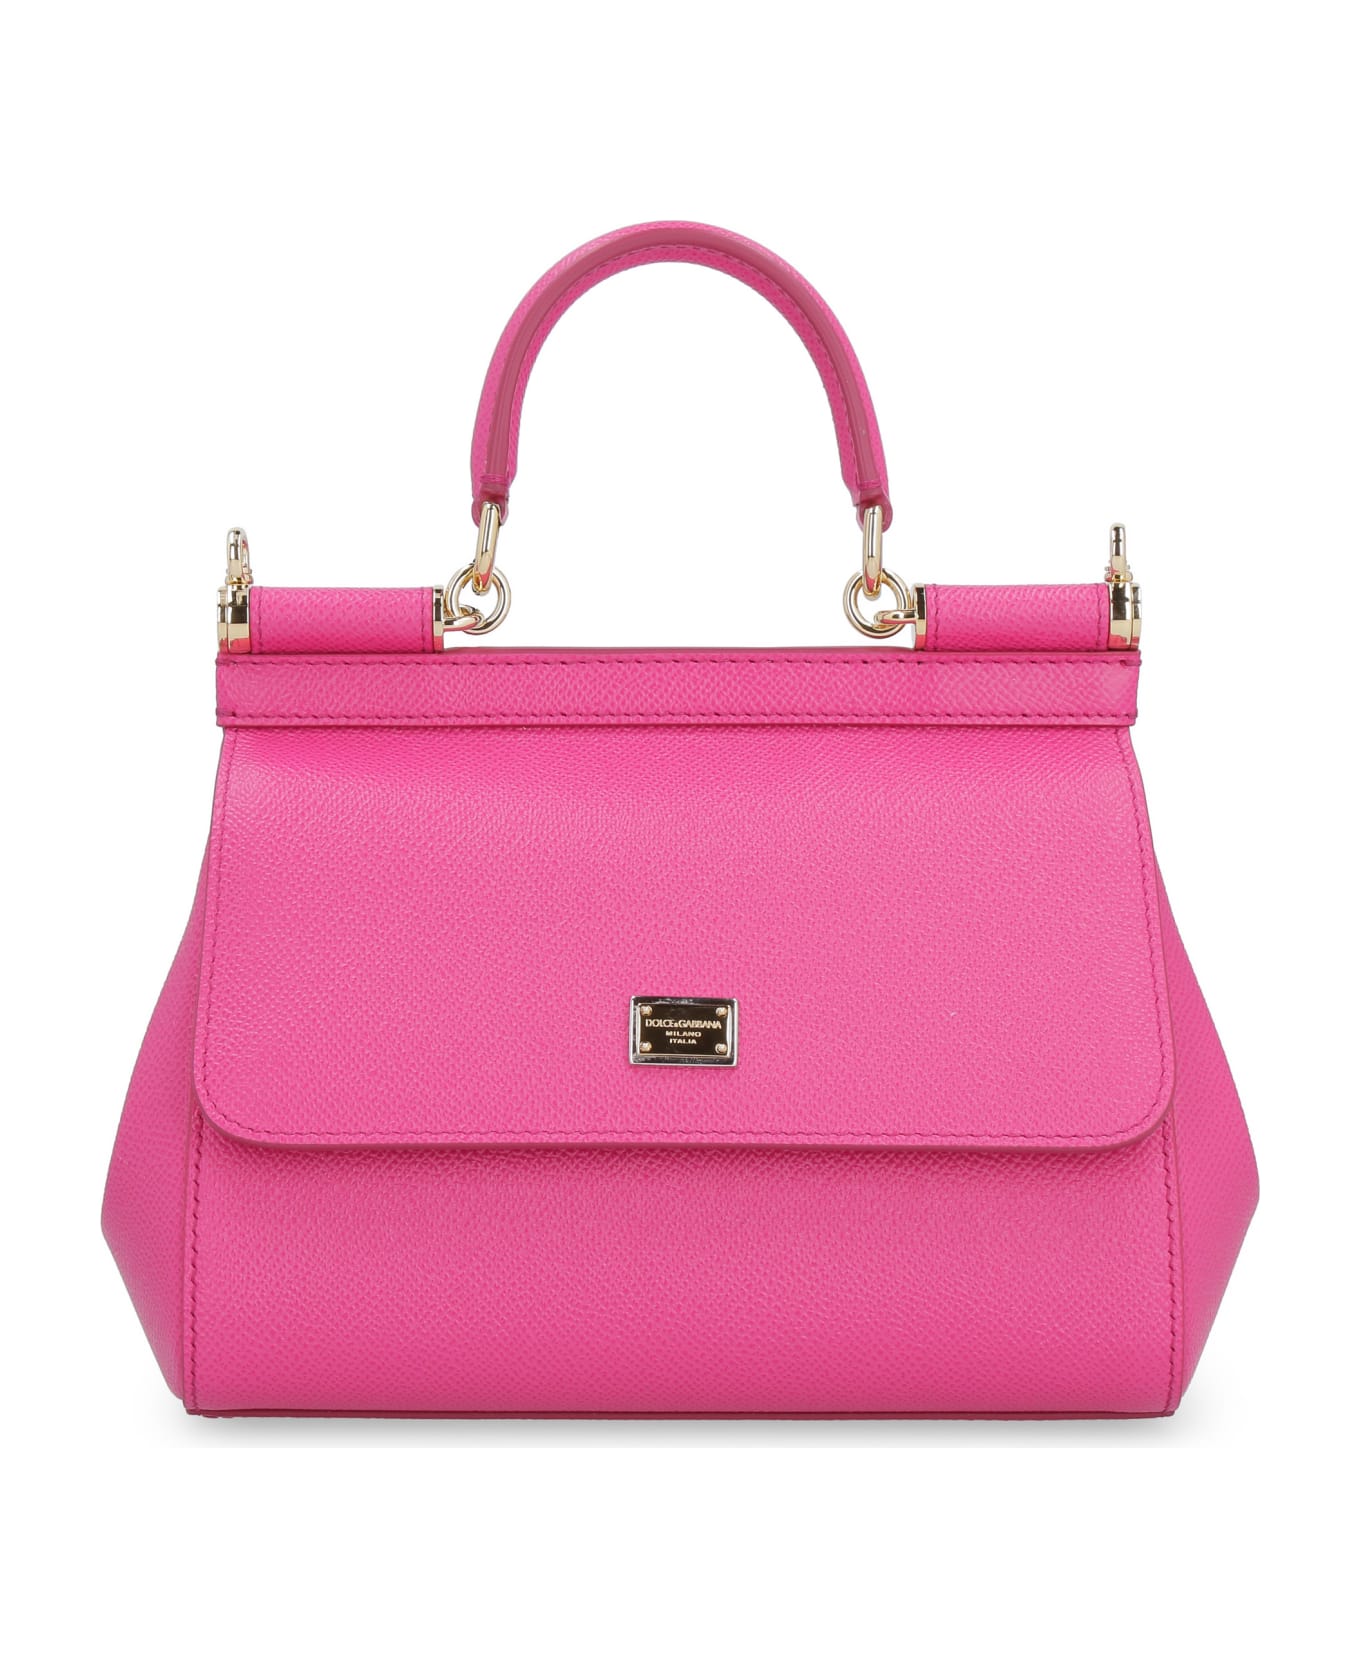 Dolce & Gabbana Sicily Small Leather Handbag | italist, ALWAYS LIKE A SALE